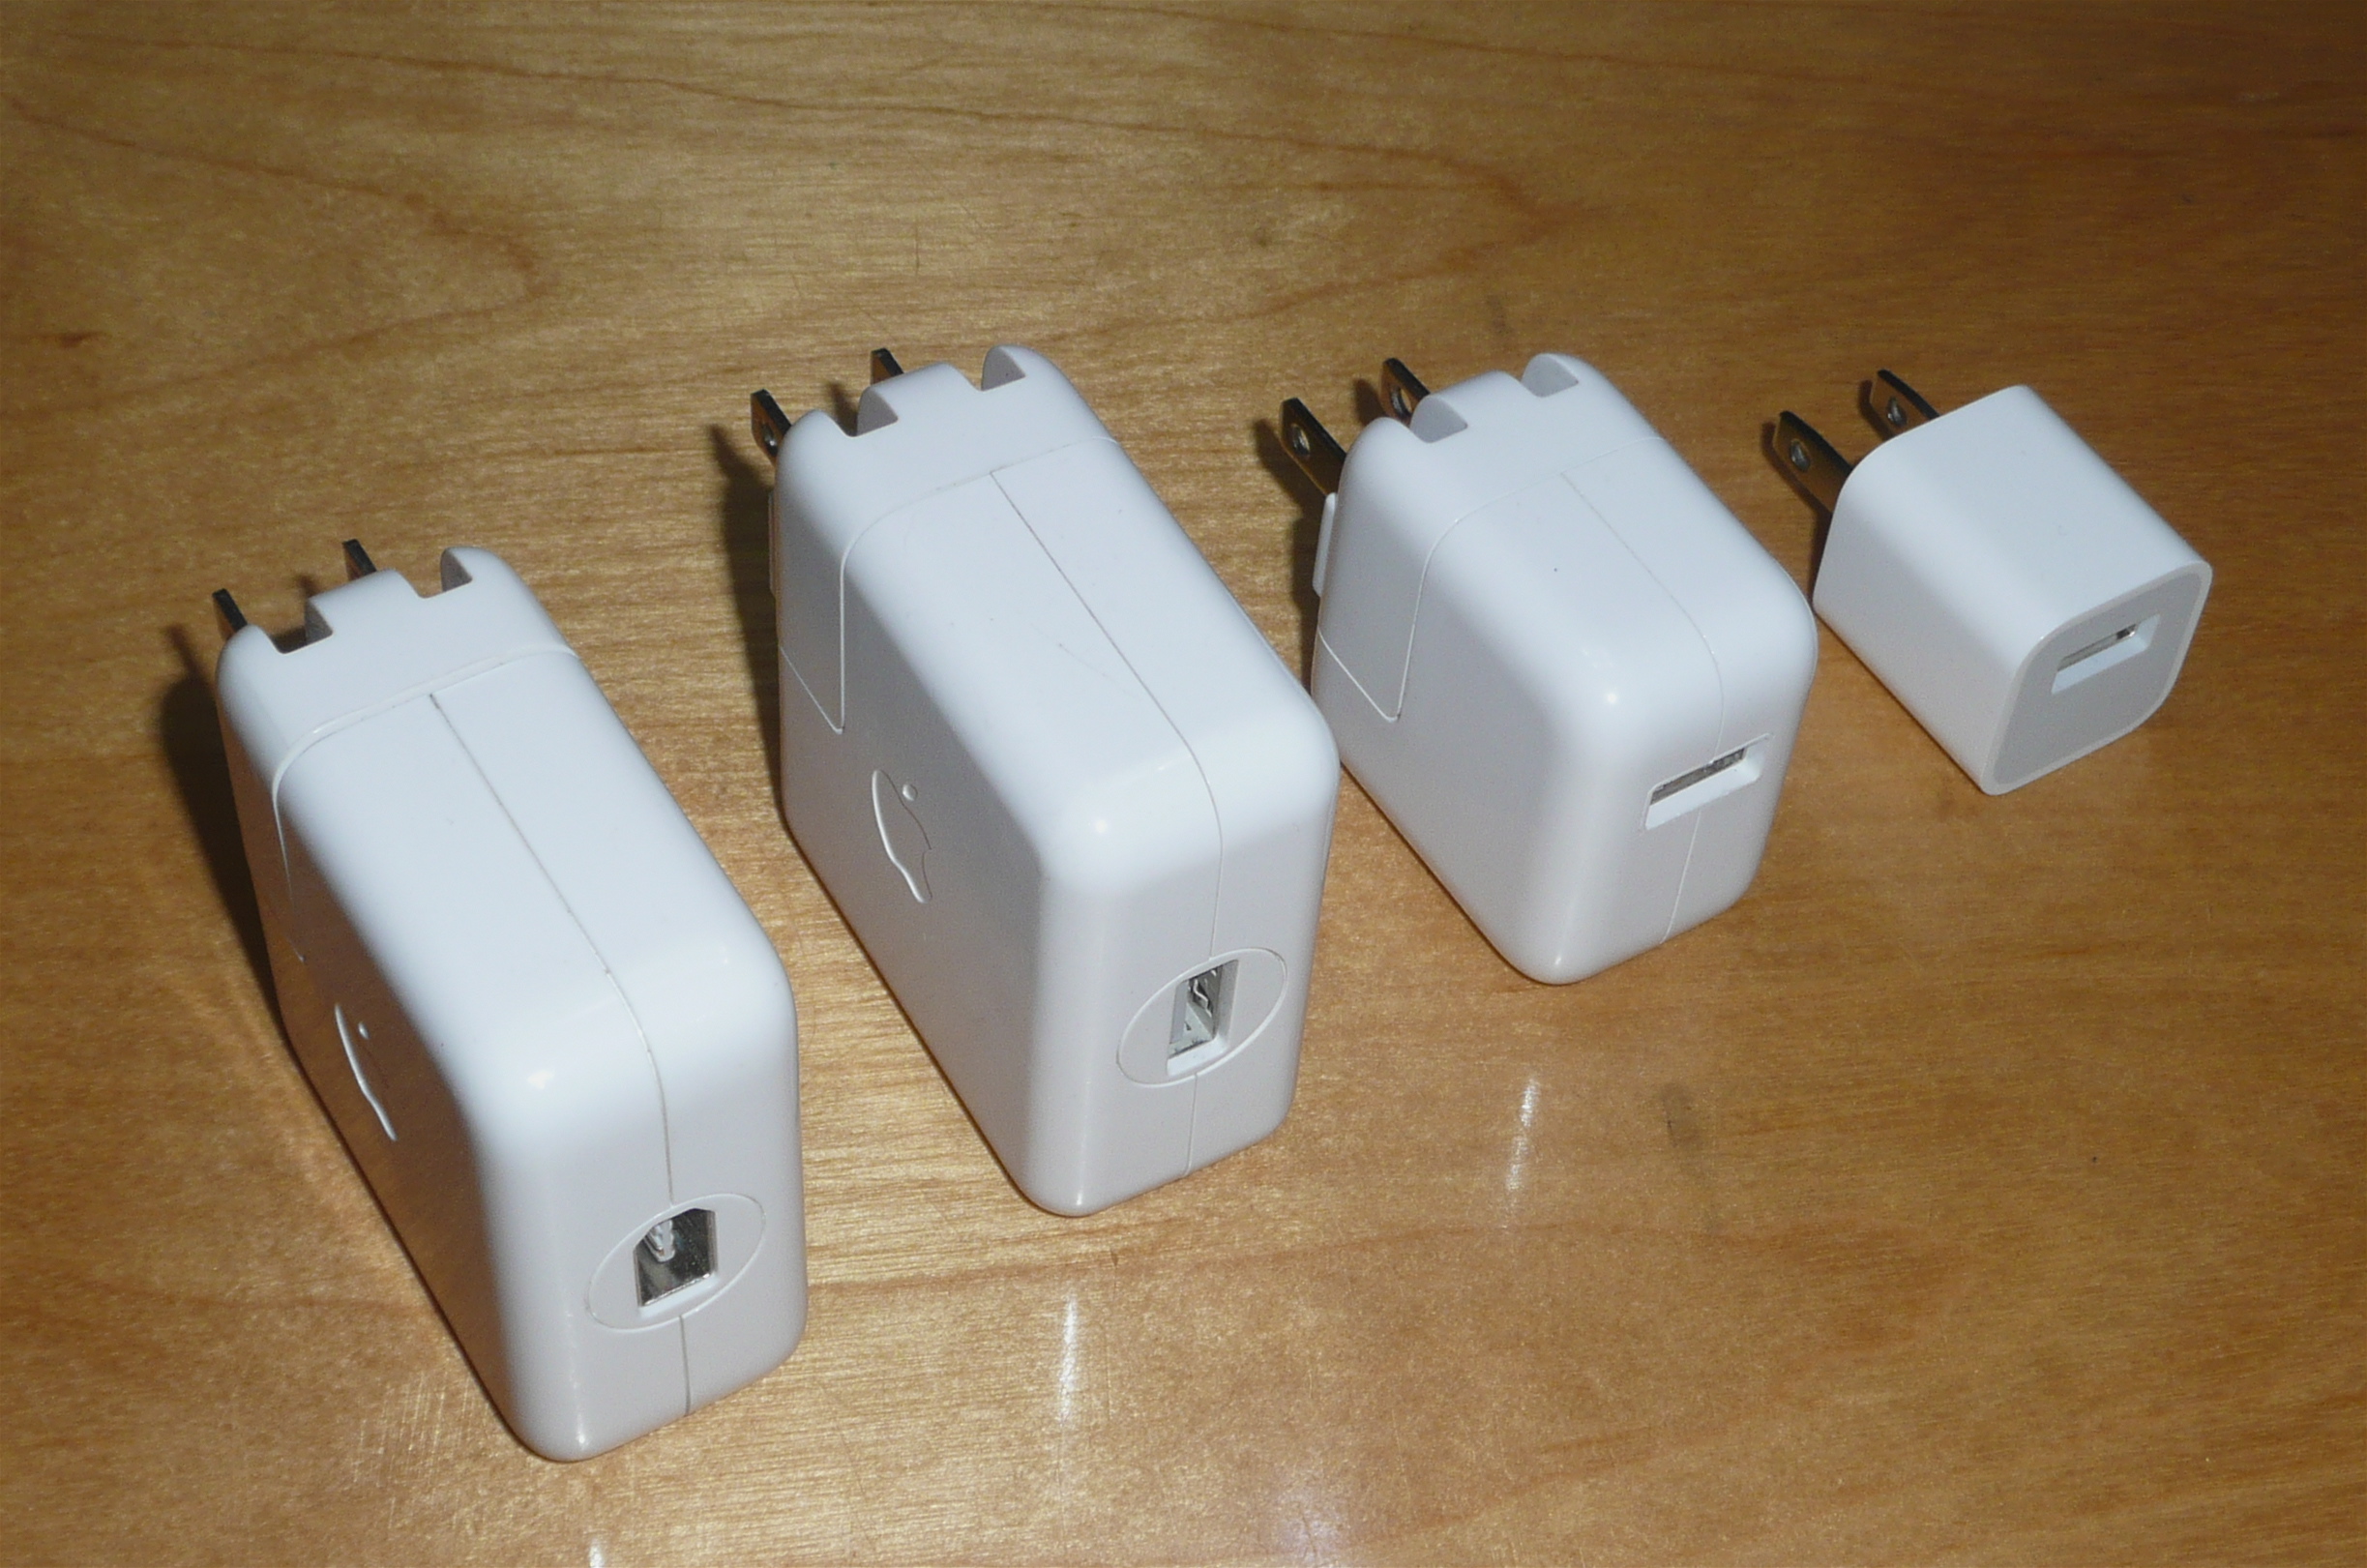 Apple Power Adapters